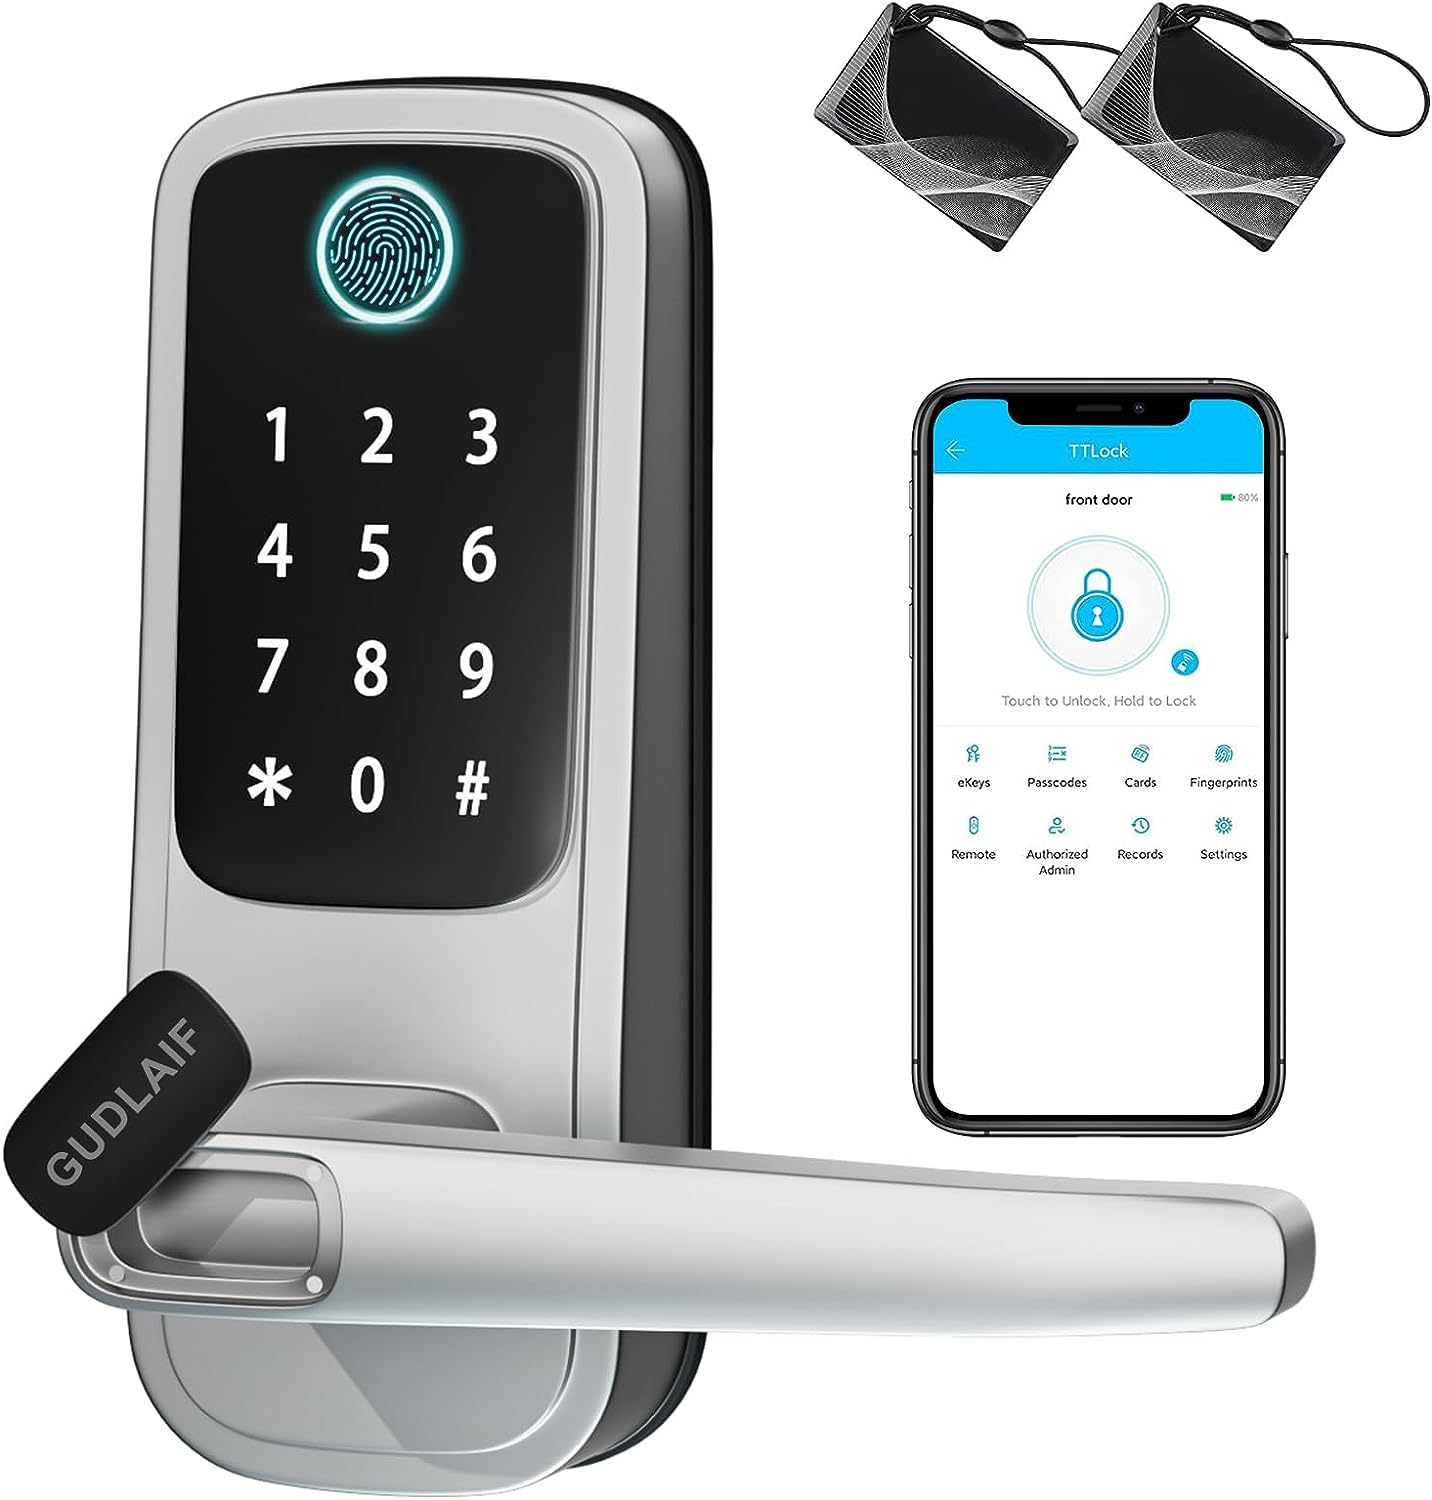 GUDLAIF Smart Lock: The Ultimate Keyless Entry Door Lock Review